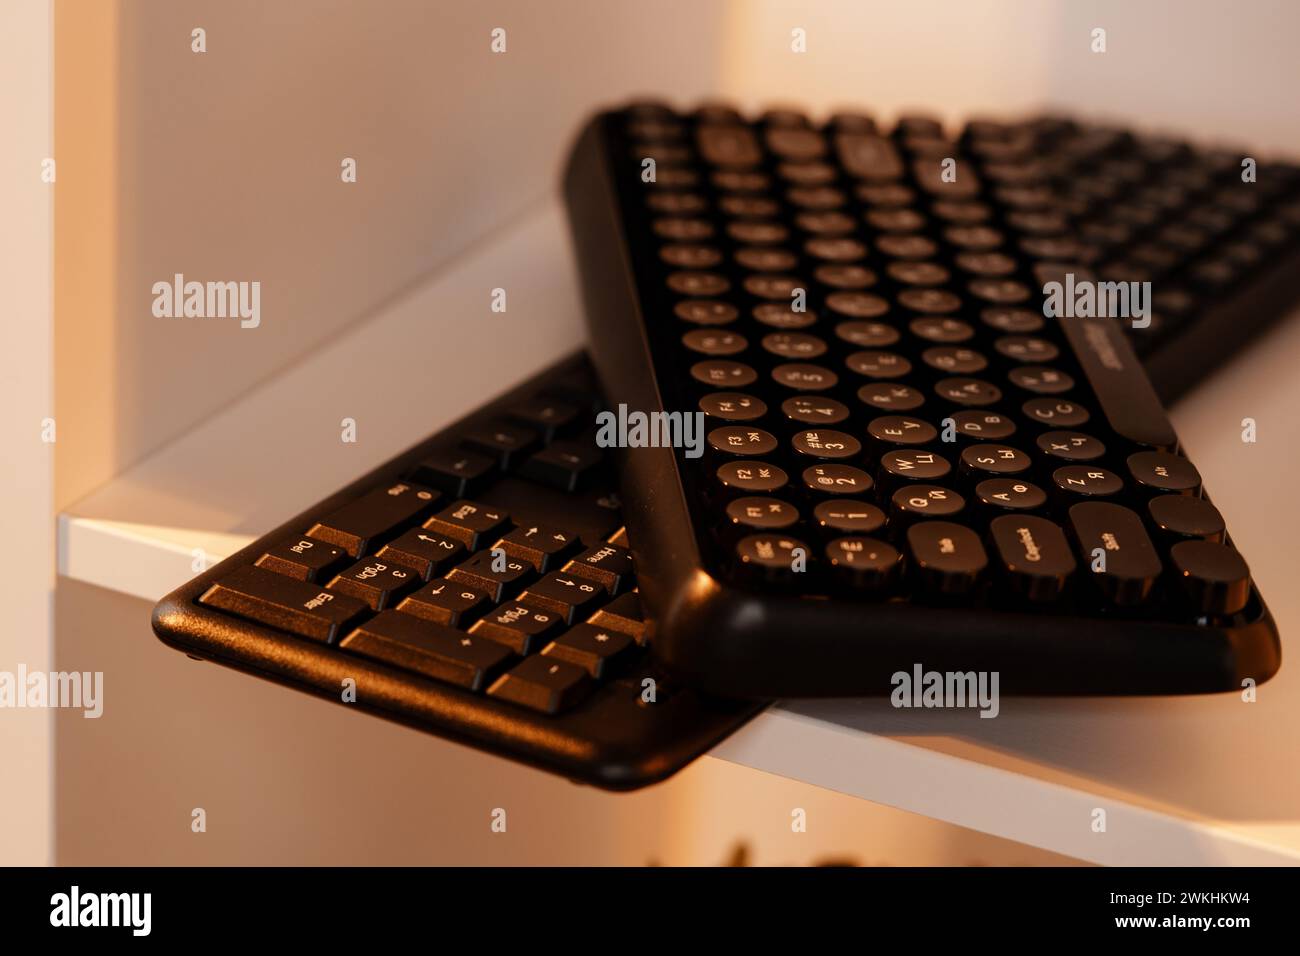 Two black wireless keyboards on a shelf Stock Photo